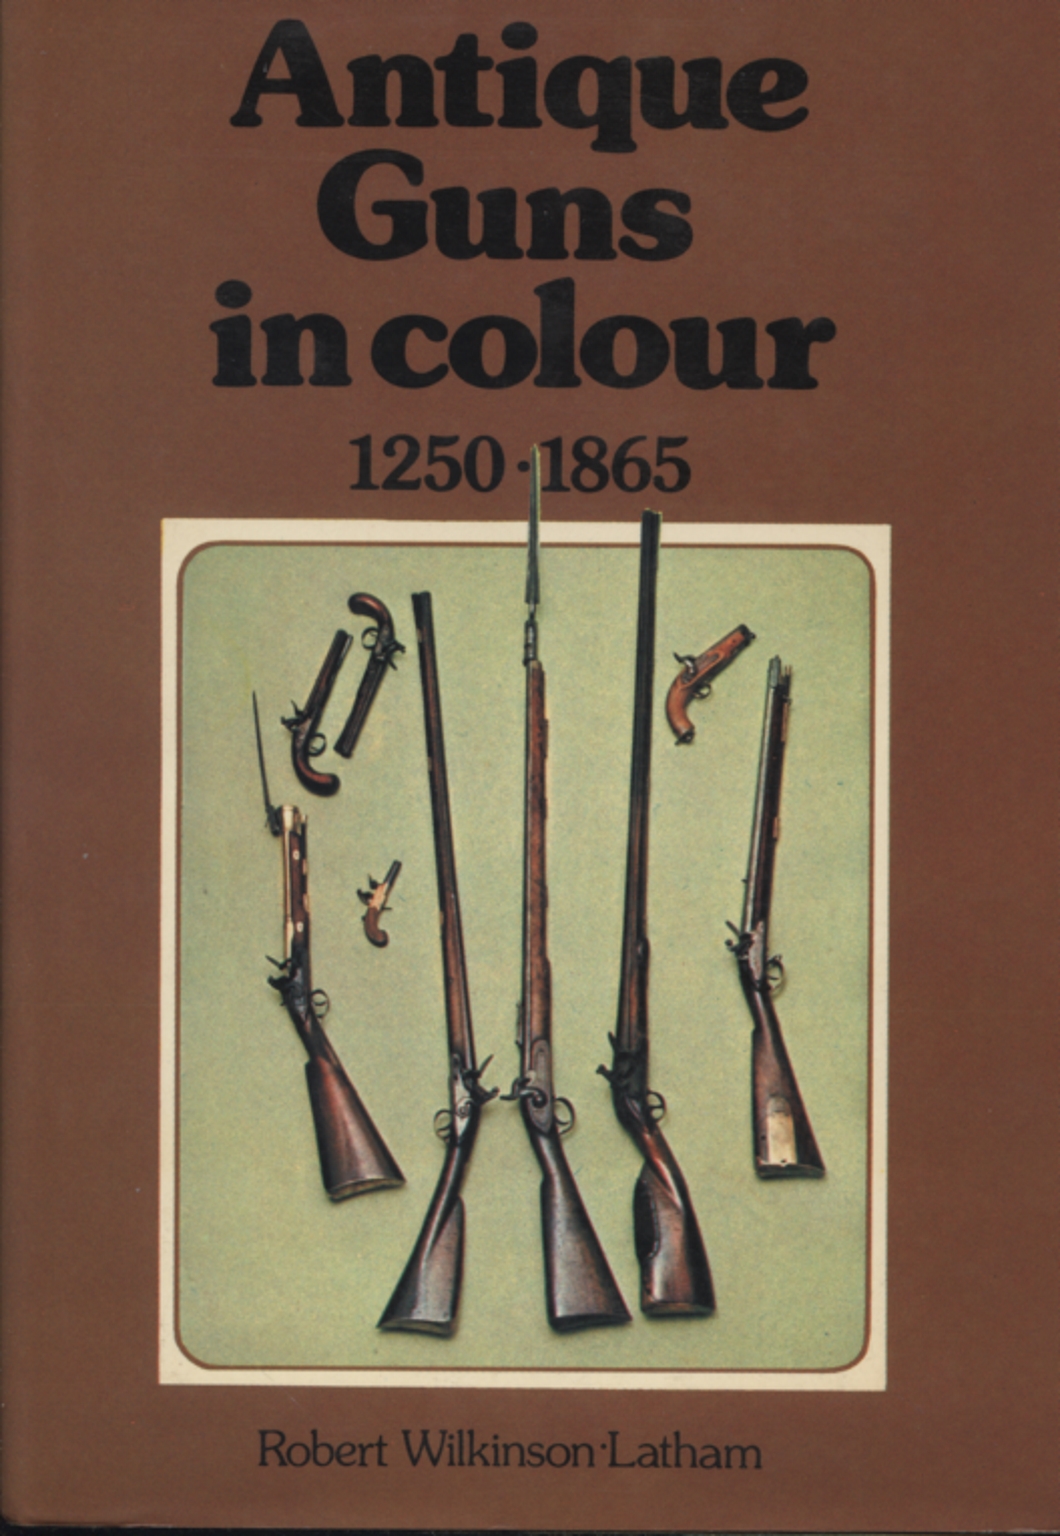 Antique Guns in Colour to 1865, Robert Wilkinson-Latham